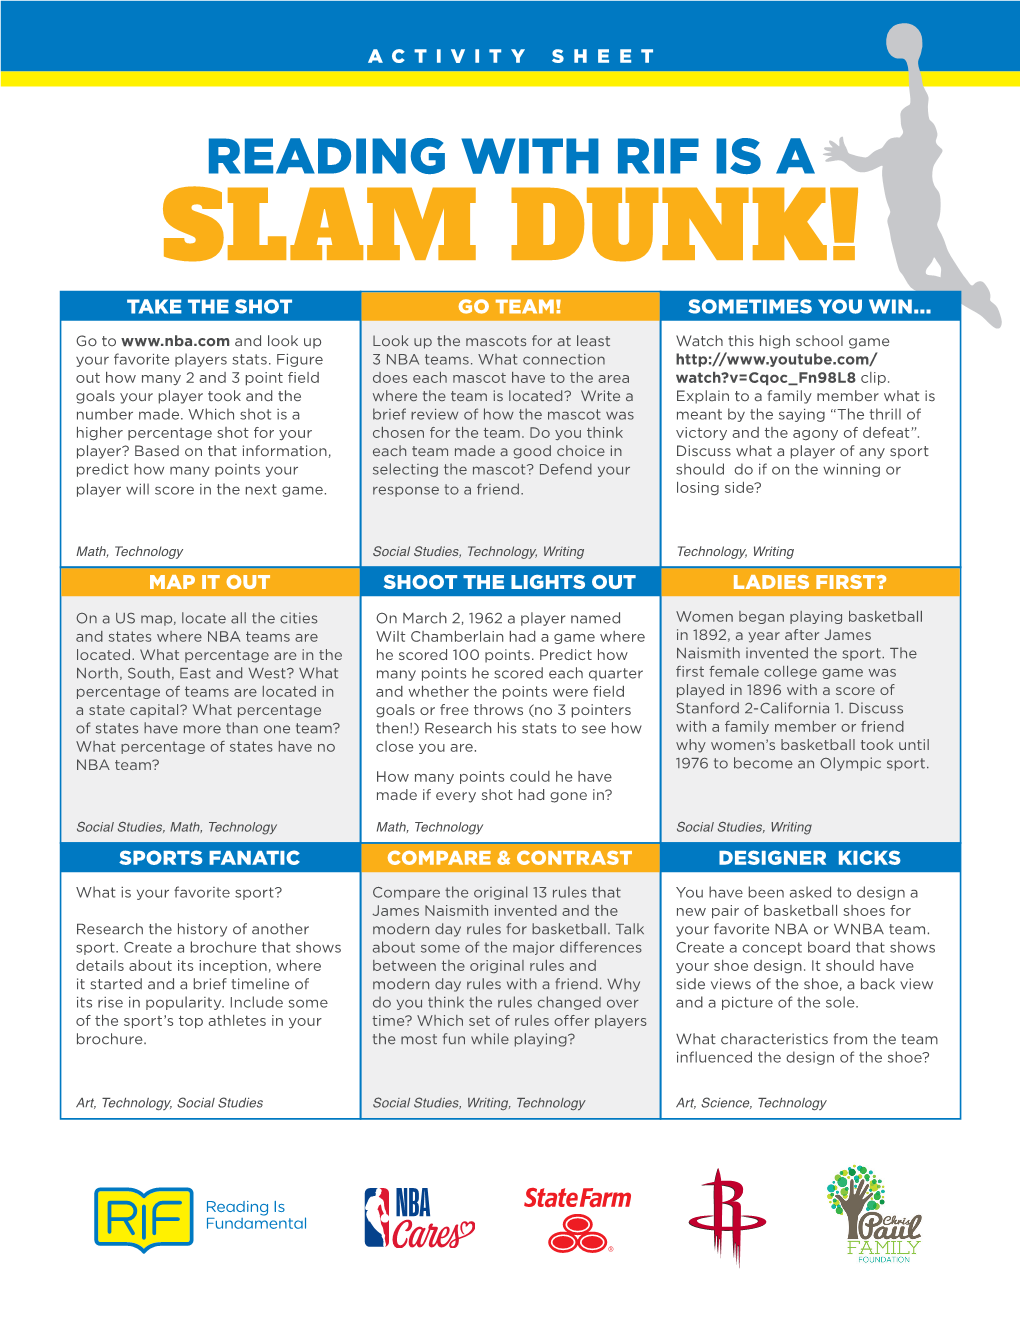 Slam Dunk! Take the Shot Go Team! Sometimes You Win